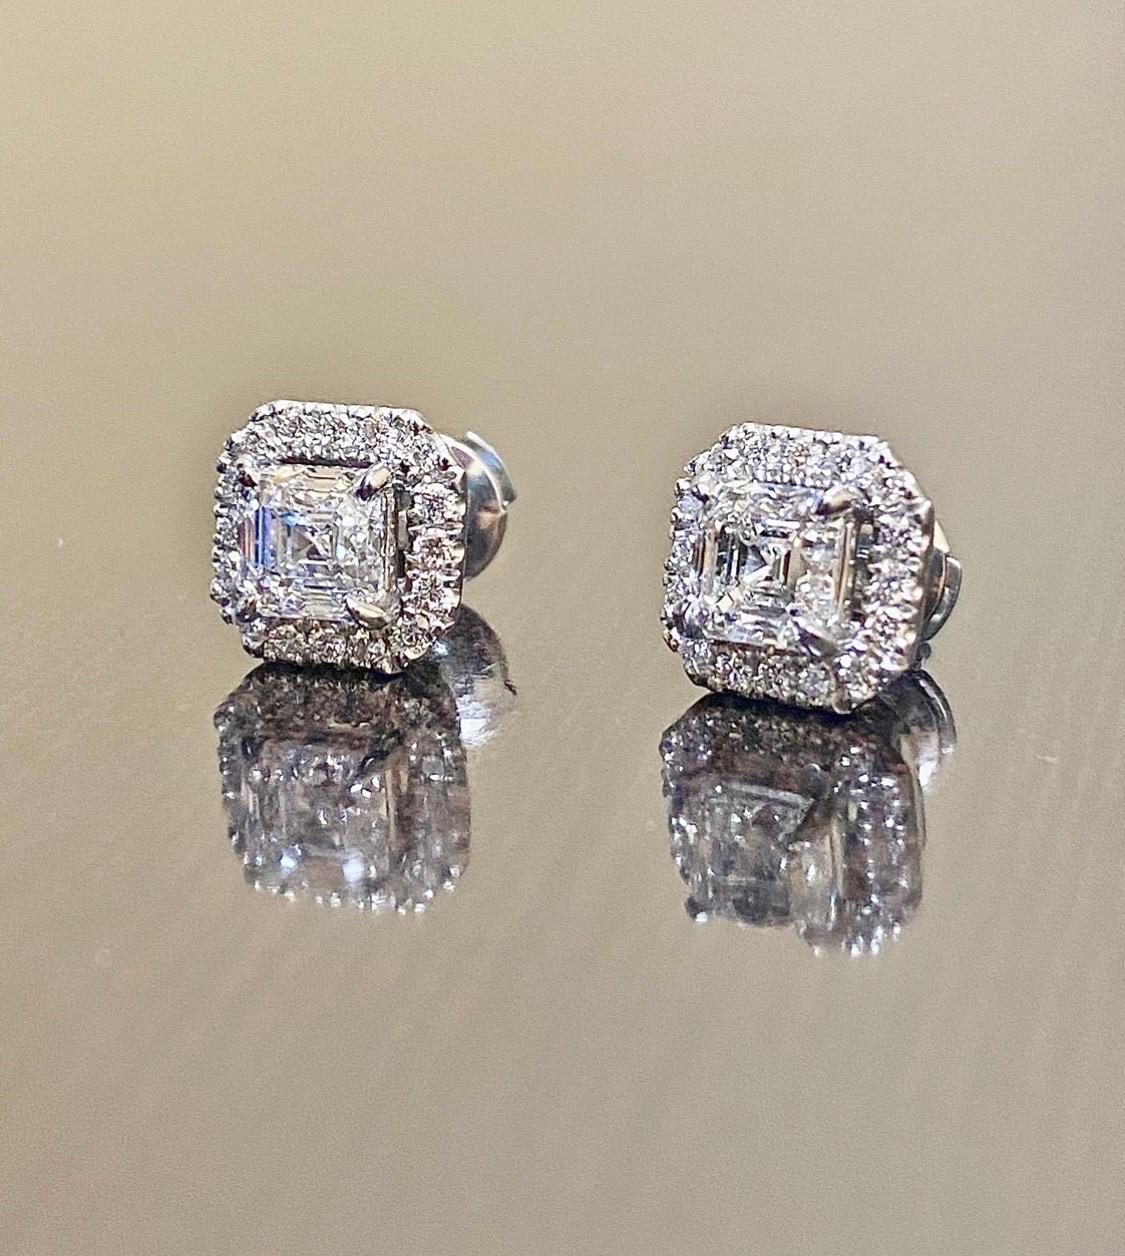 Halo Platinum GIA Certified 2.22 Carat F Color Asscher Cut Diamond Earrings For Sale 3